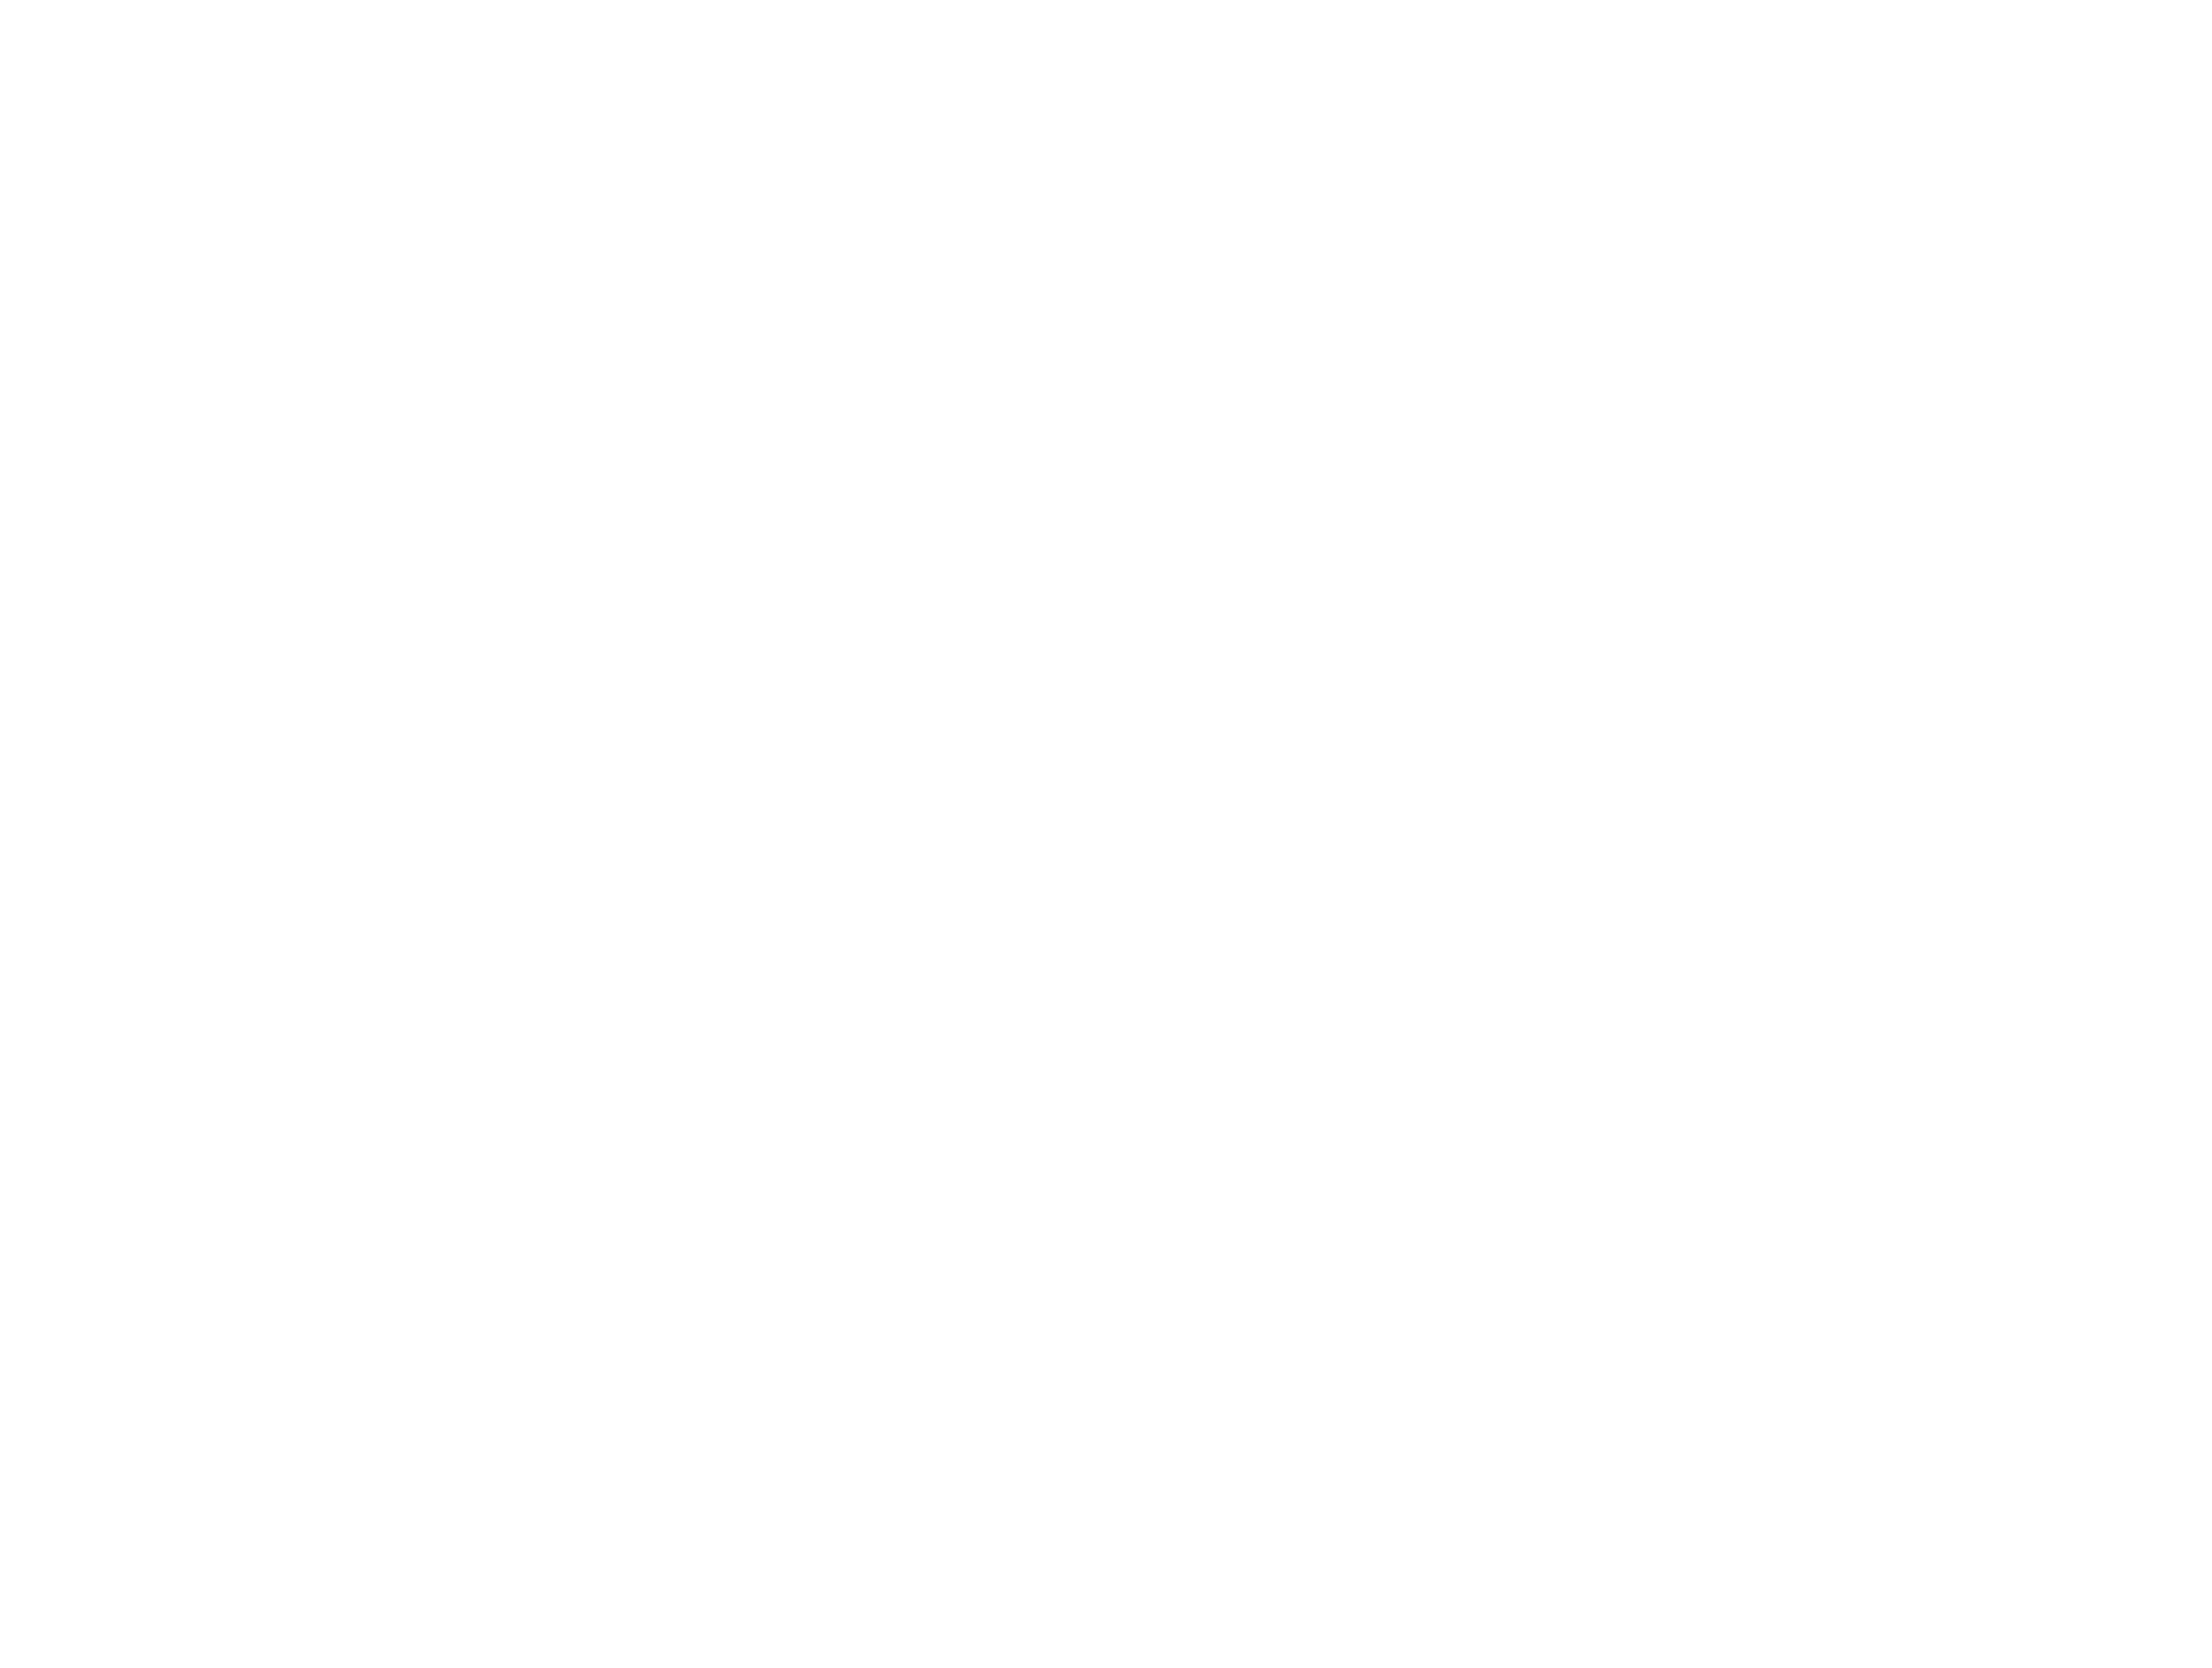 Amplify_white_transparent